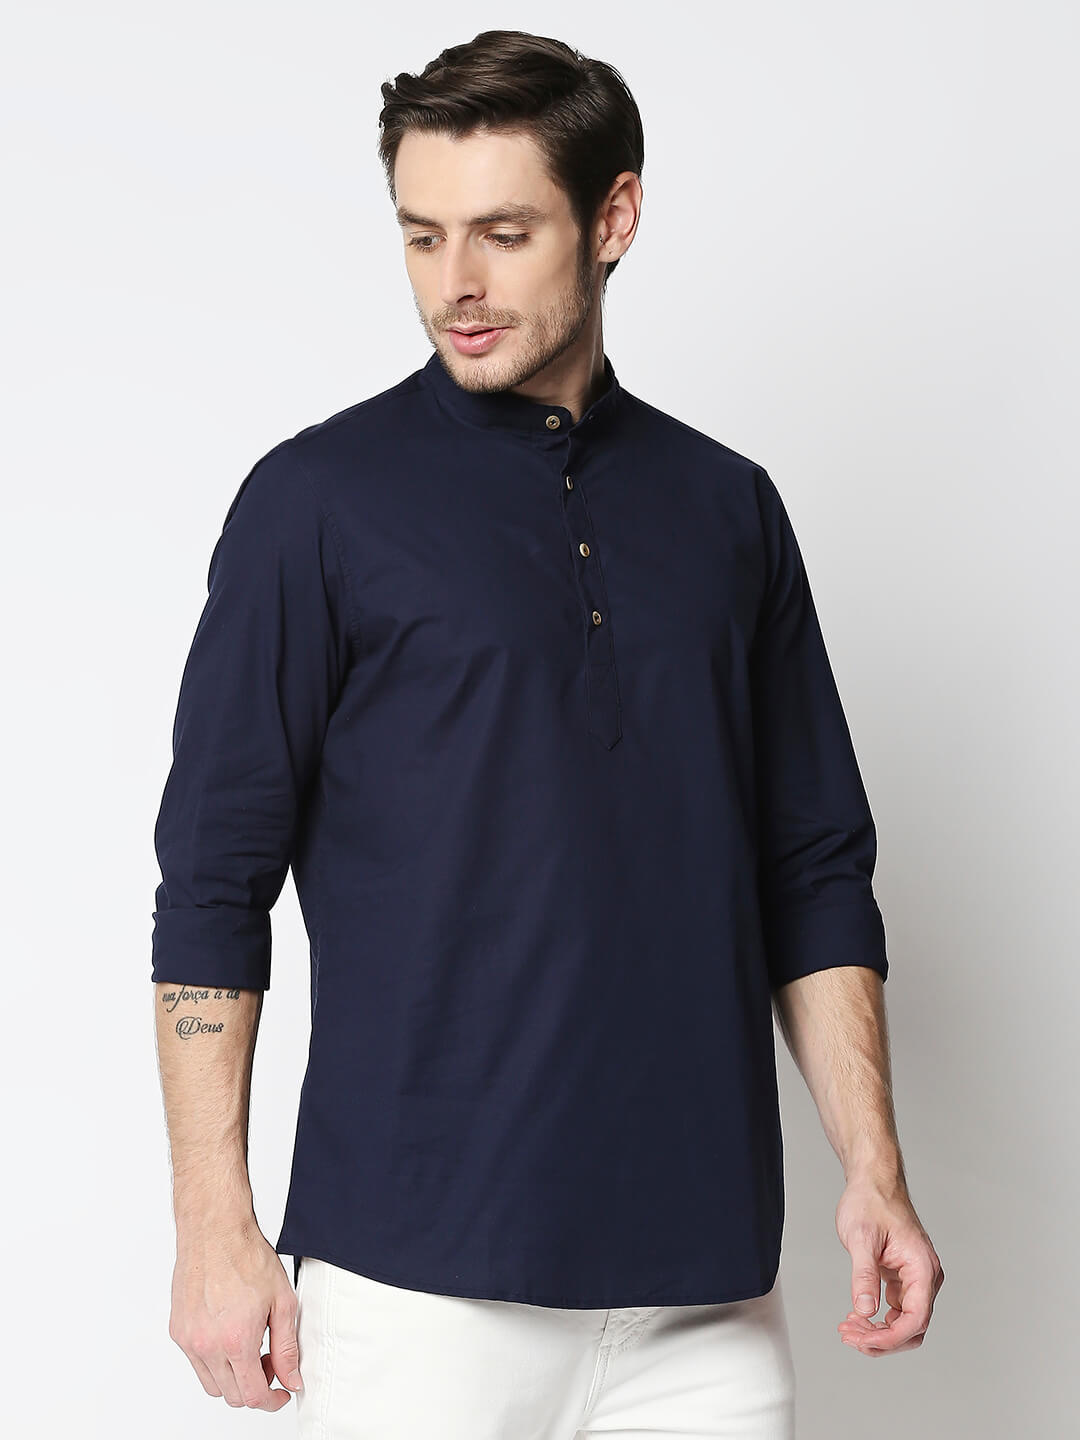 The Manaca Mandarin Collar Plain Shirt - Navy Blue